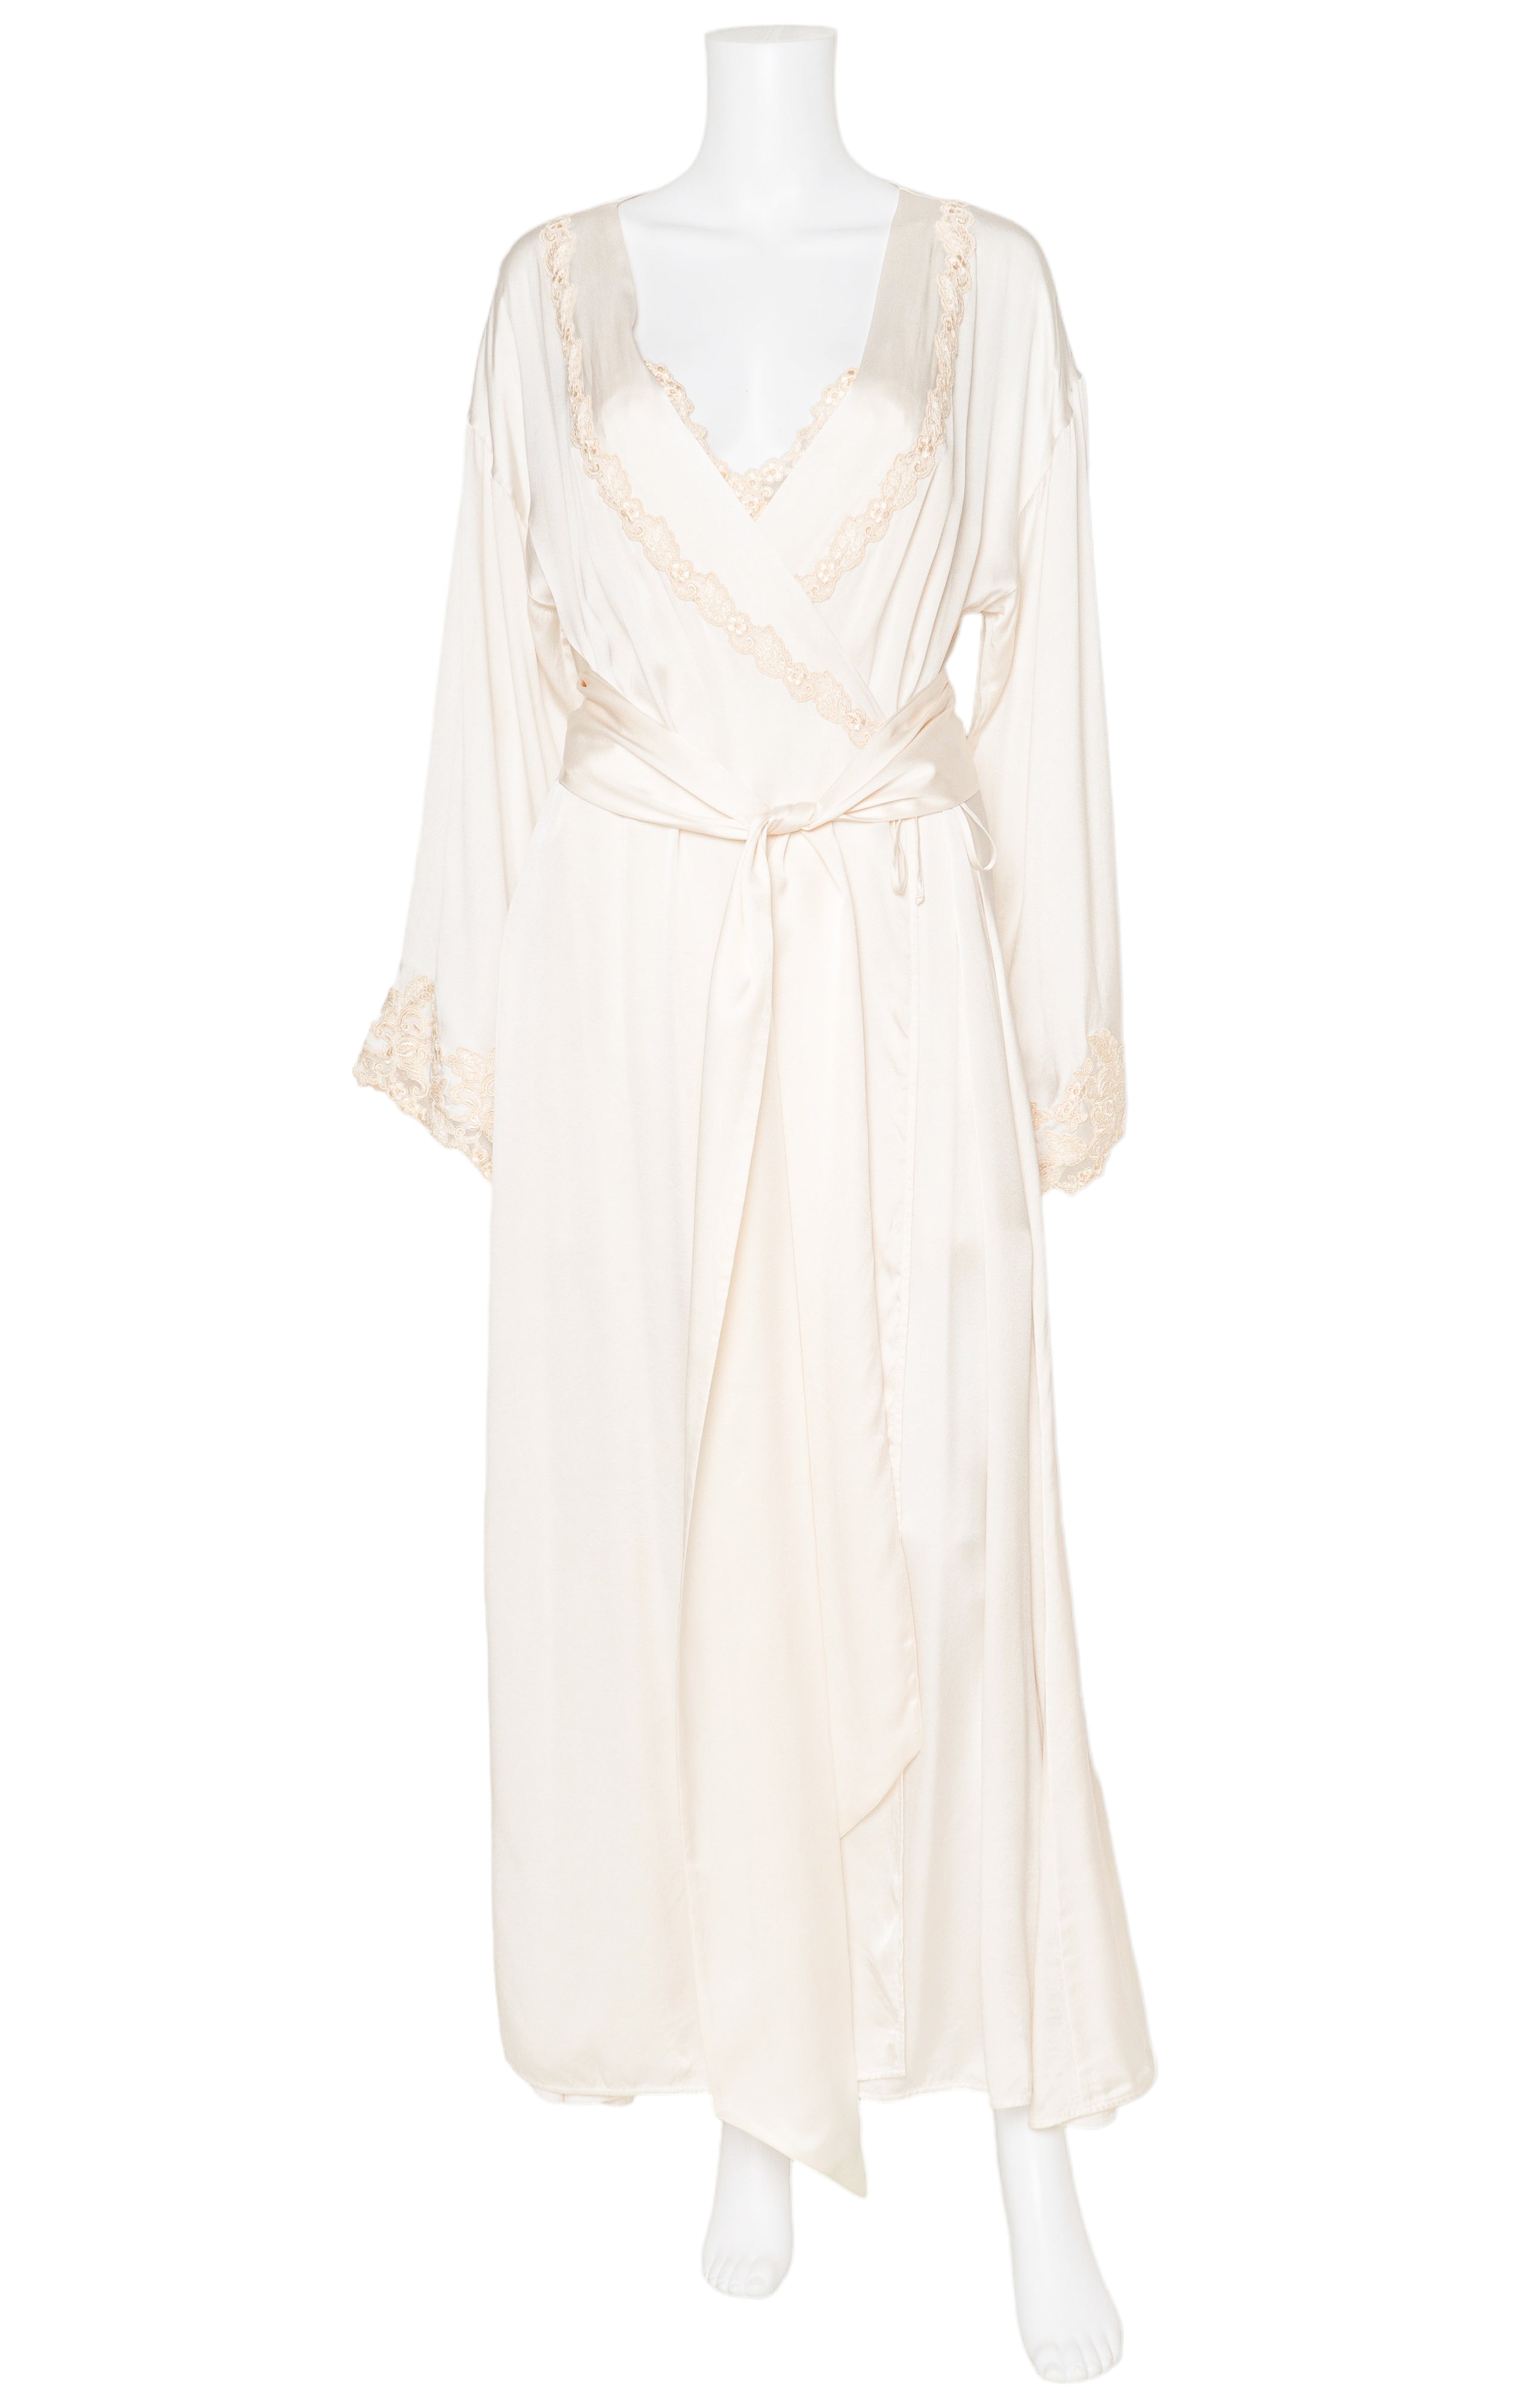 LA PERLA (RARE) Pajama Set Size: Robe - Marked a 2 / Fits like M Dress - Marked a 3 / Fits like L Price $1,995